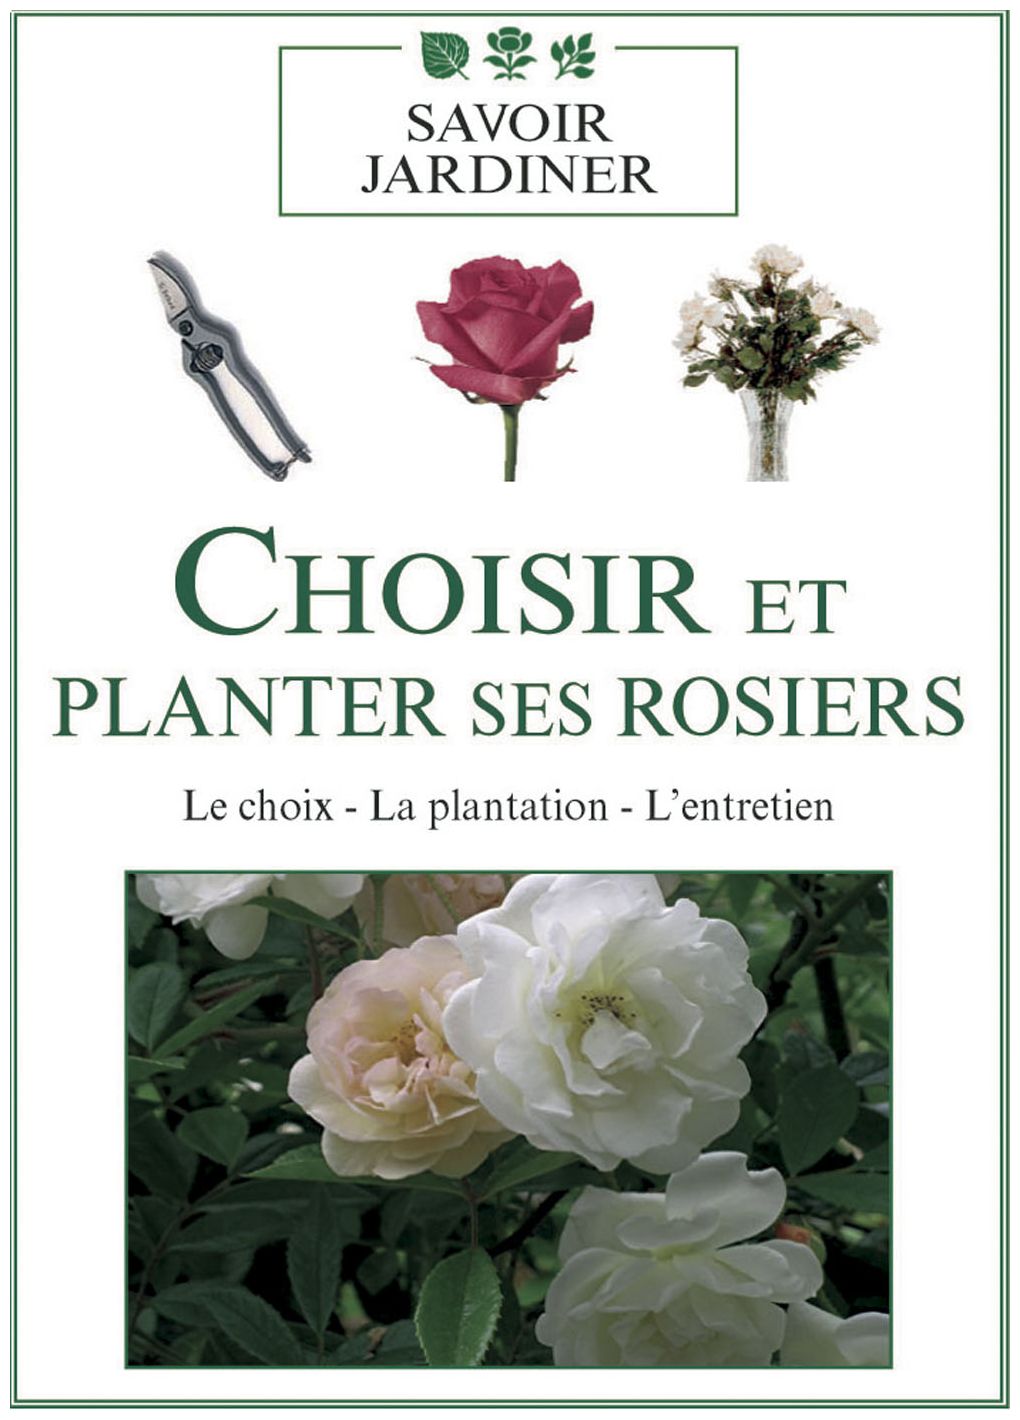 Choisir Et Planter Ses Rosiers [DVD]